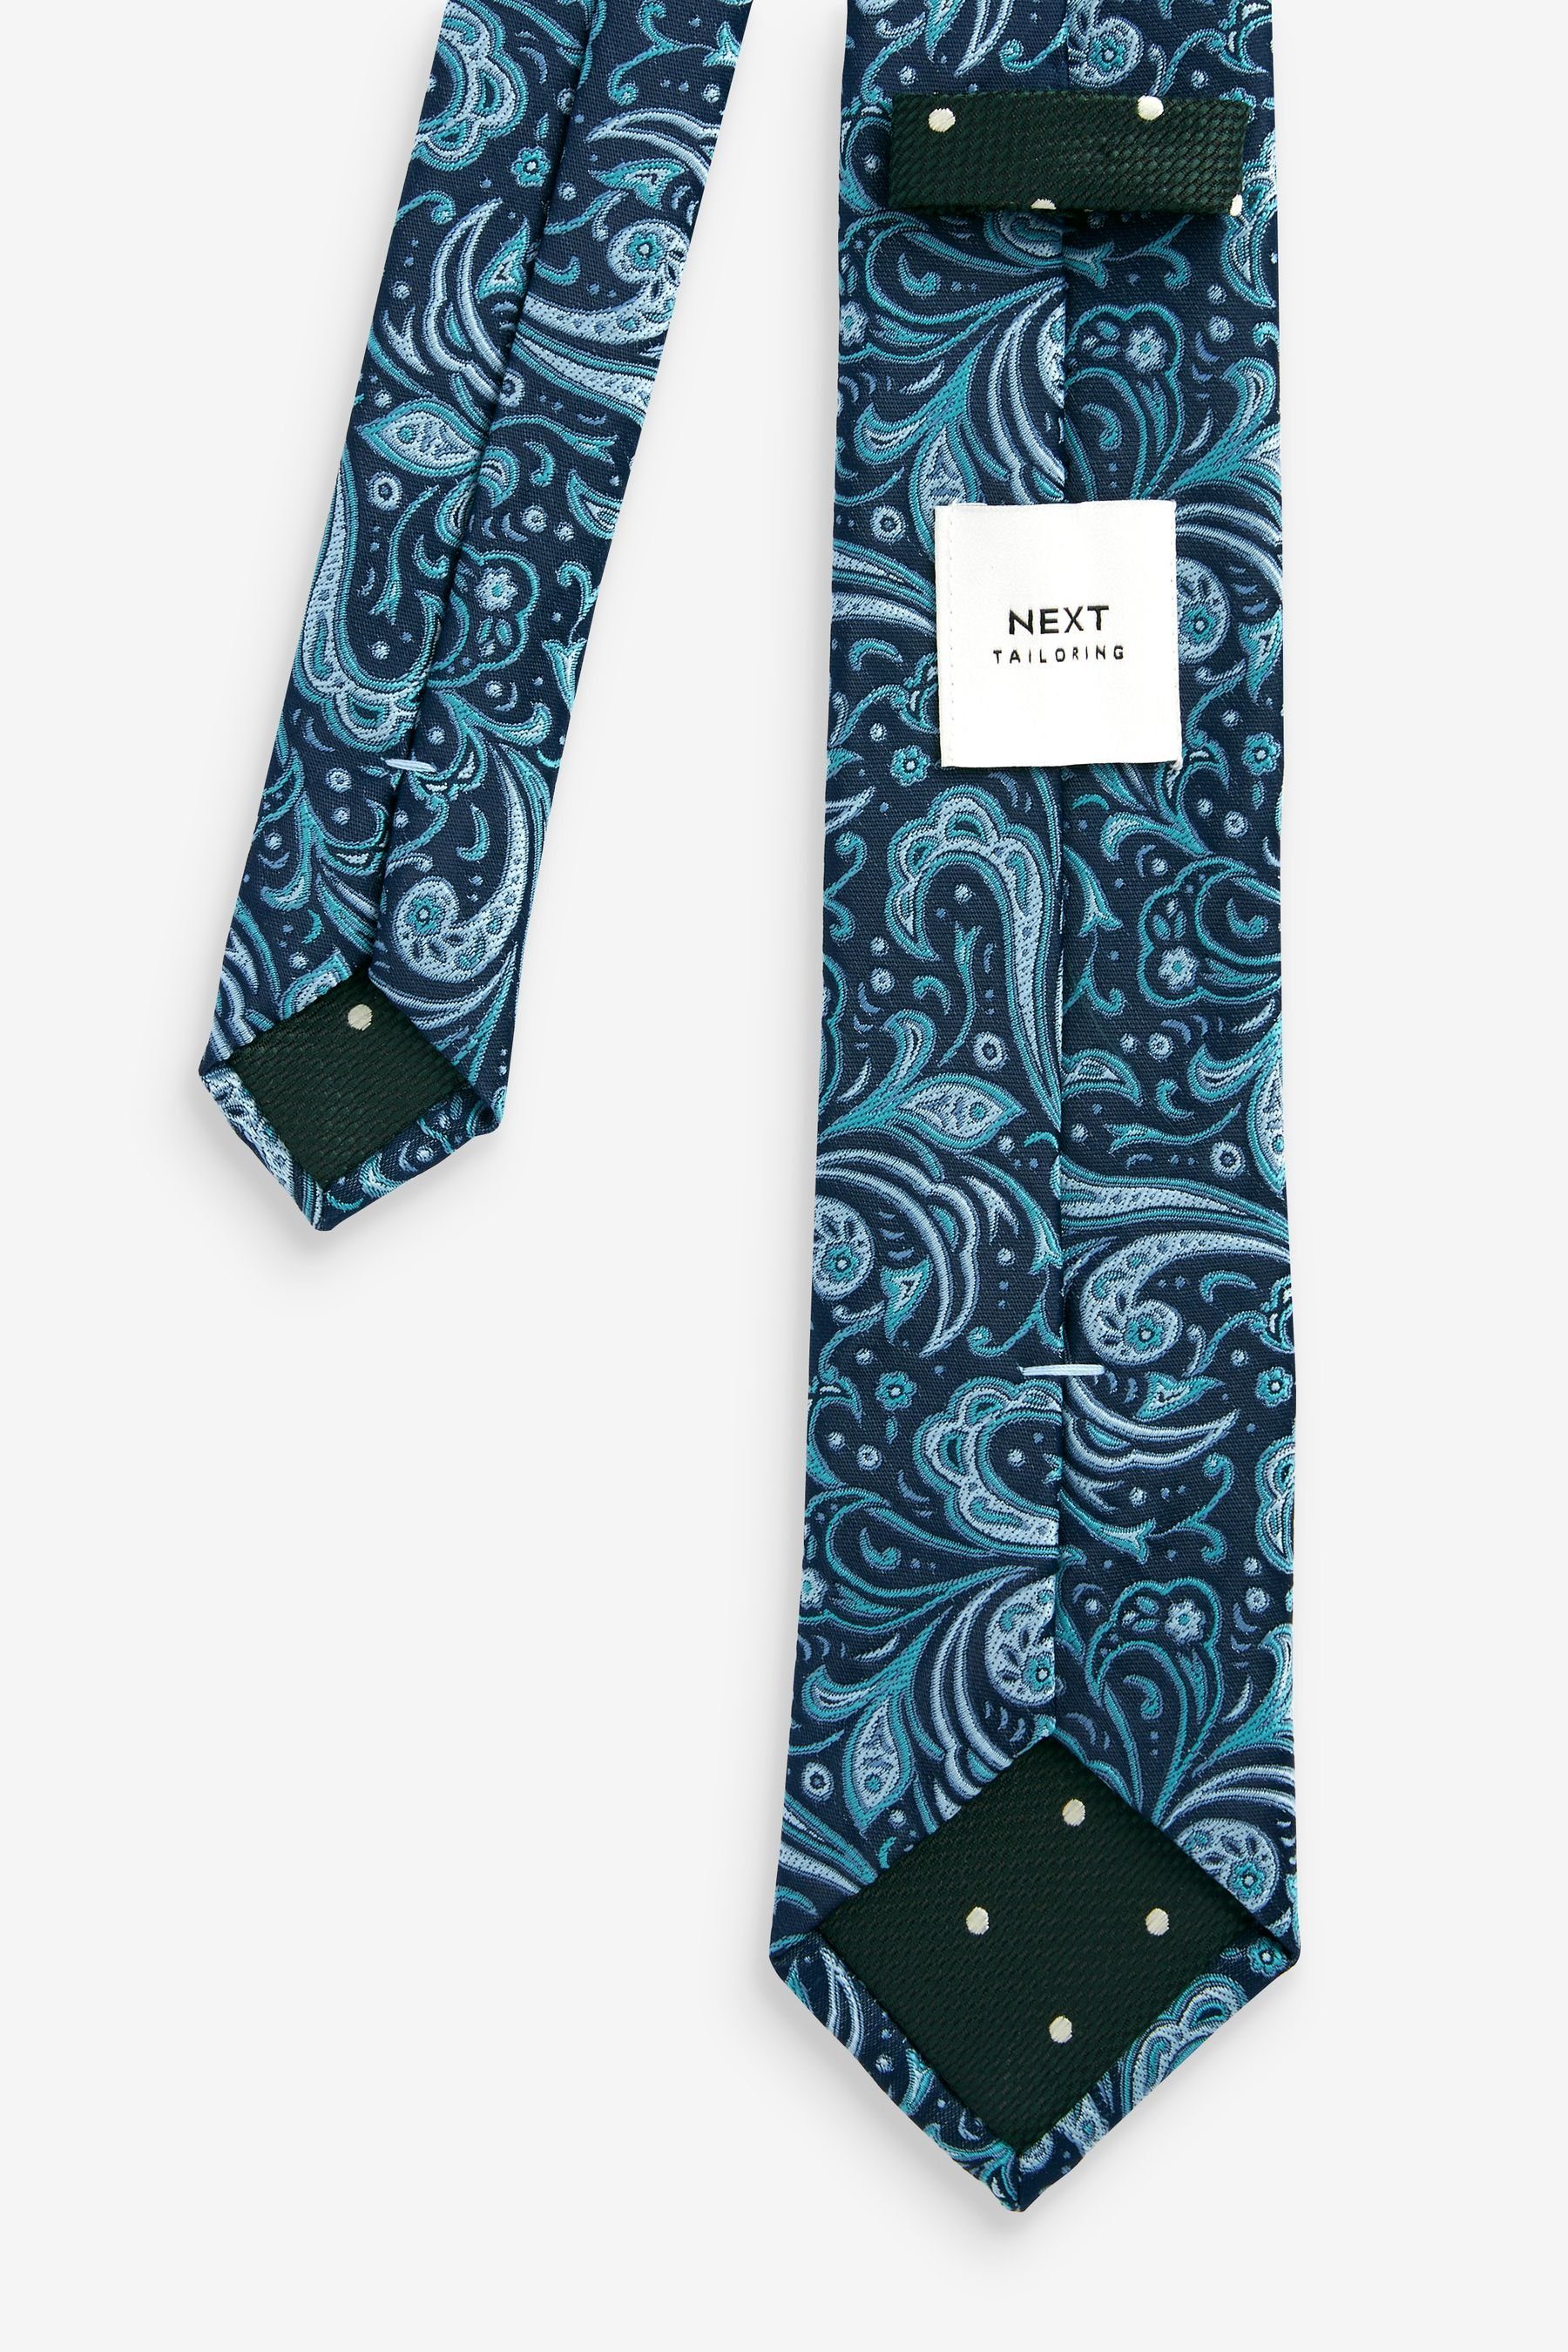 Next Navy Paisley Krawatte mit Krawatte Krawattenklammer, Slim Gemusterte Blue (2-St)